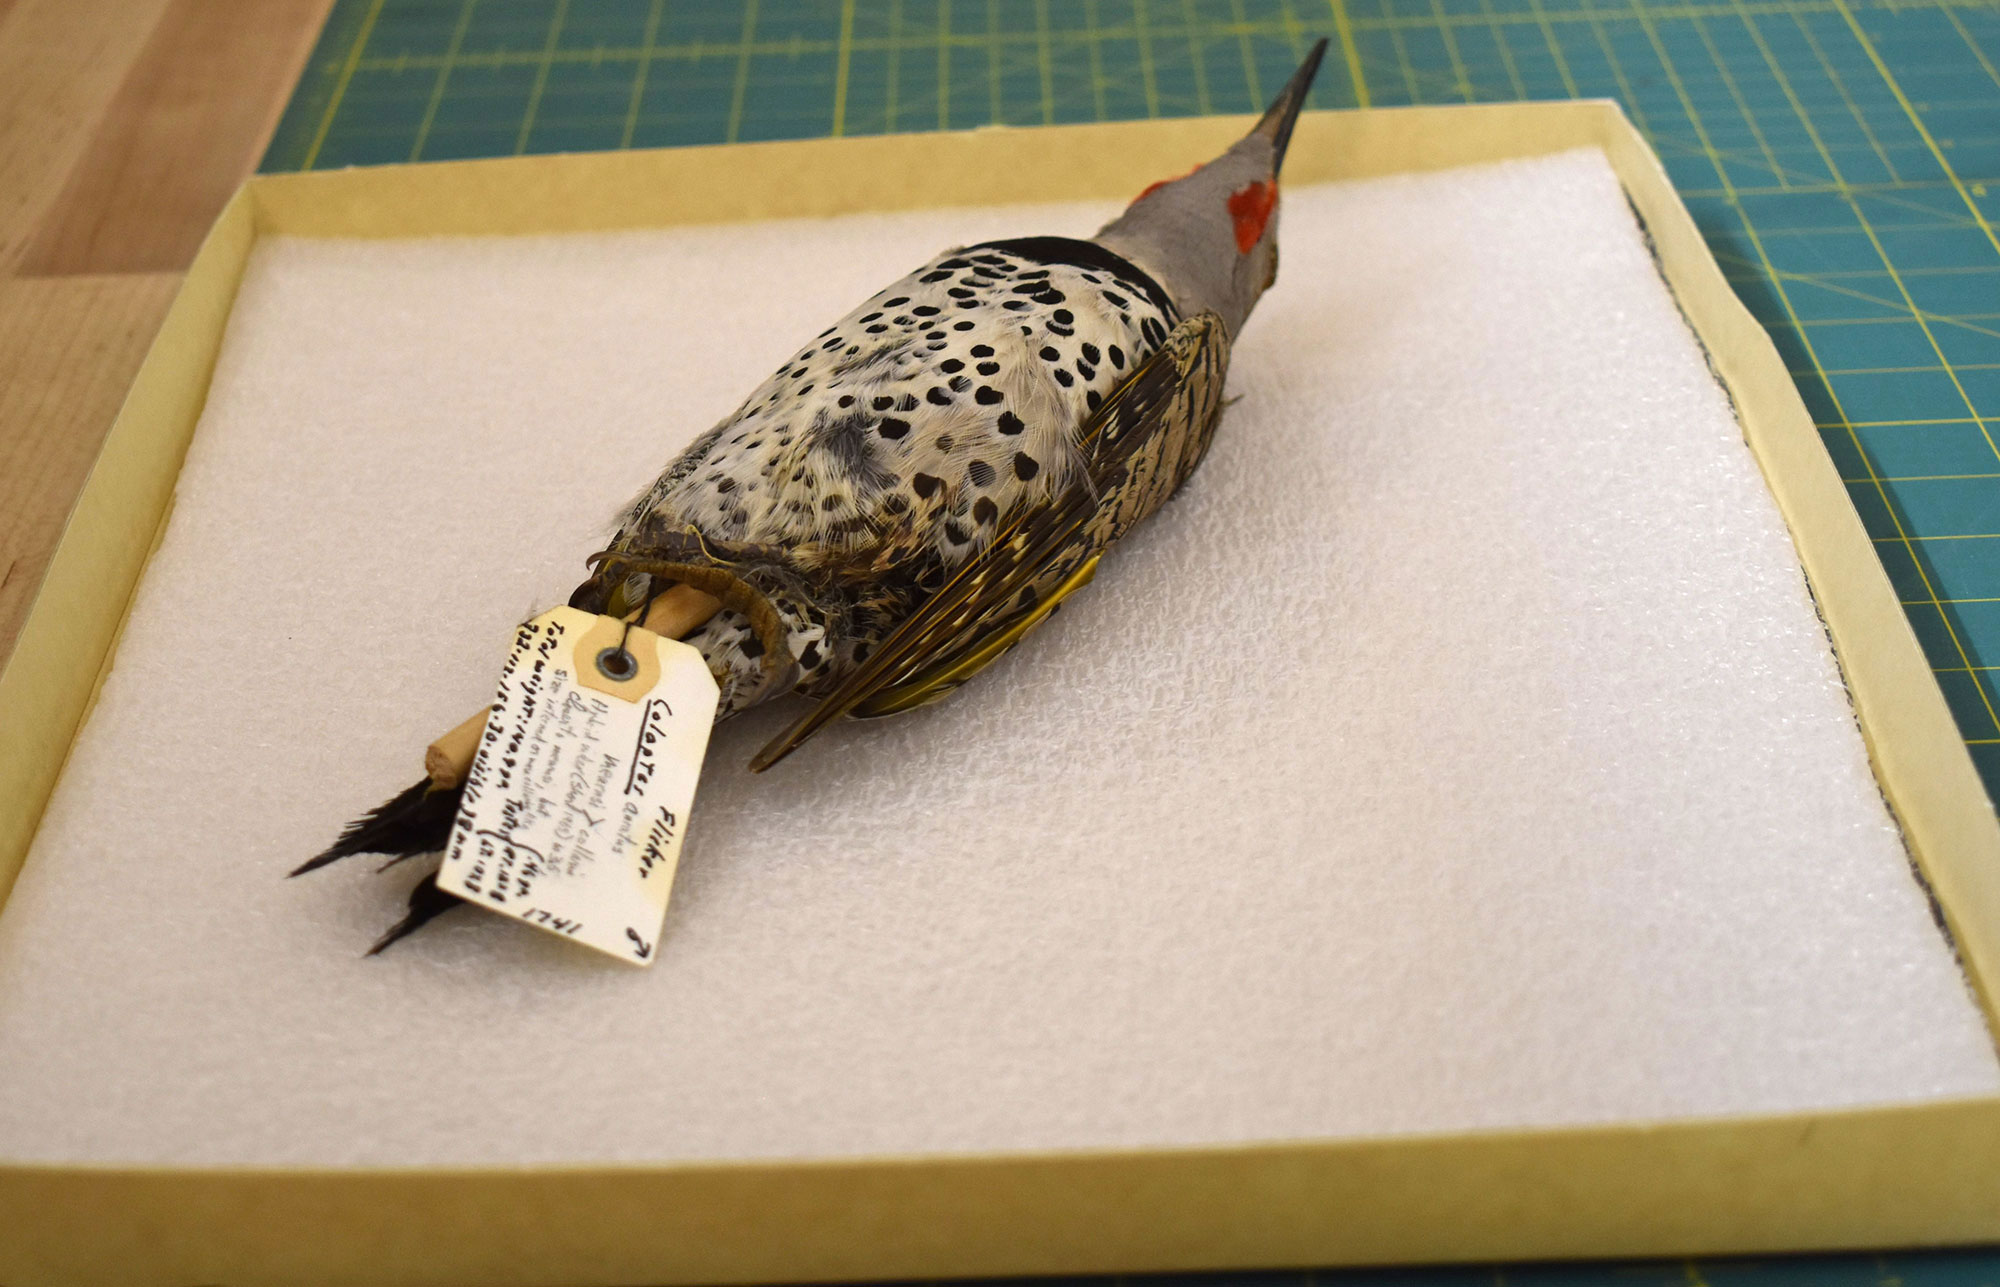 Measuring bird specimens